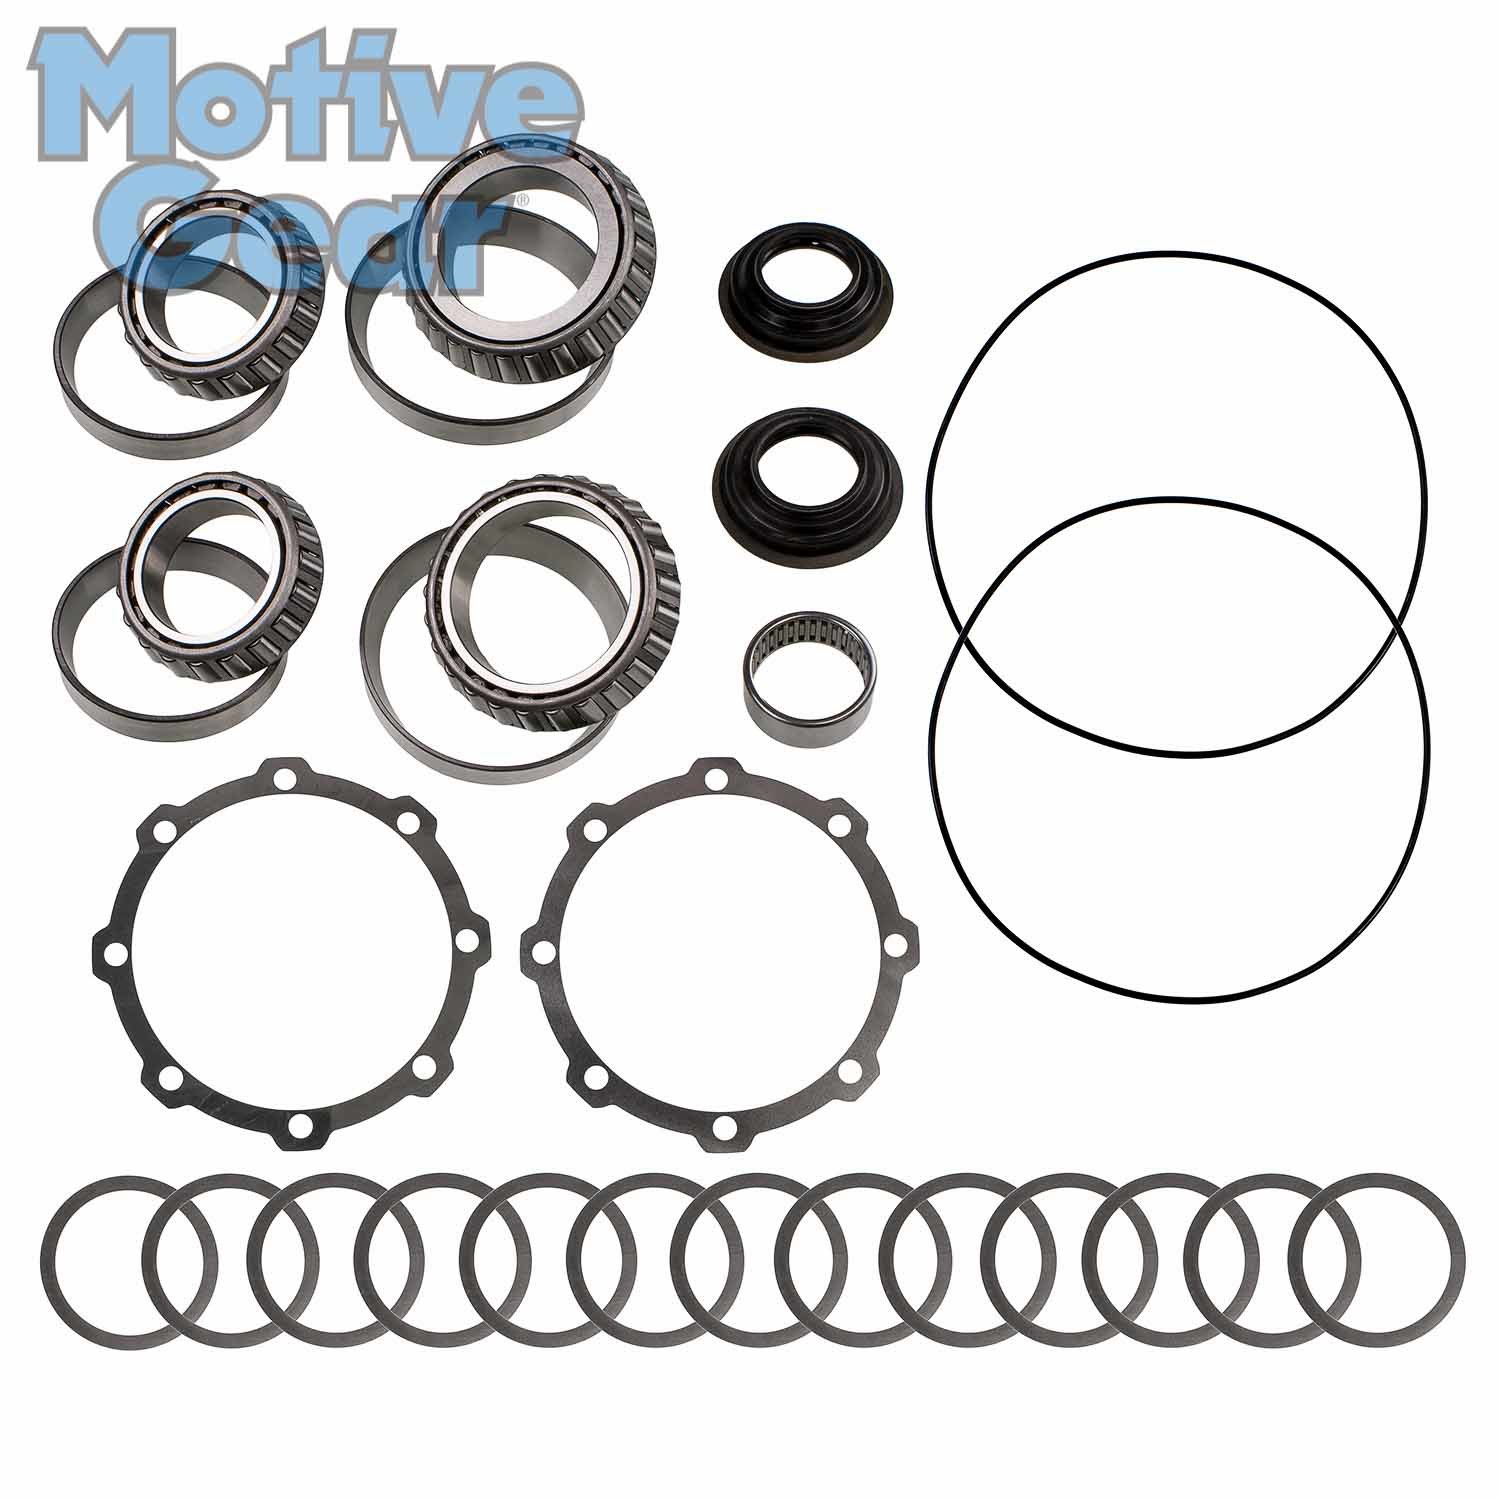 Motive Gear R10RVLMKT Differential Installation Kit, Master, Bearings / Gasket / Seals / Thread Locker, Chevy Corvette 1997-2013, Kit